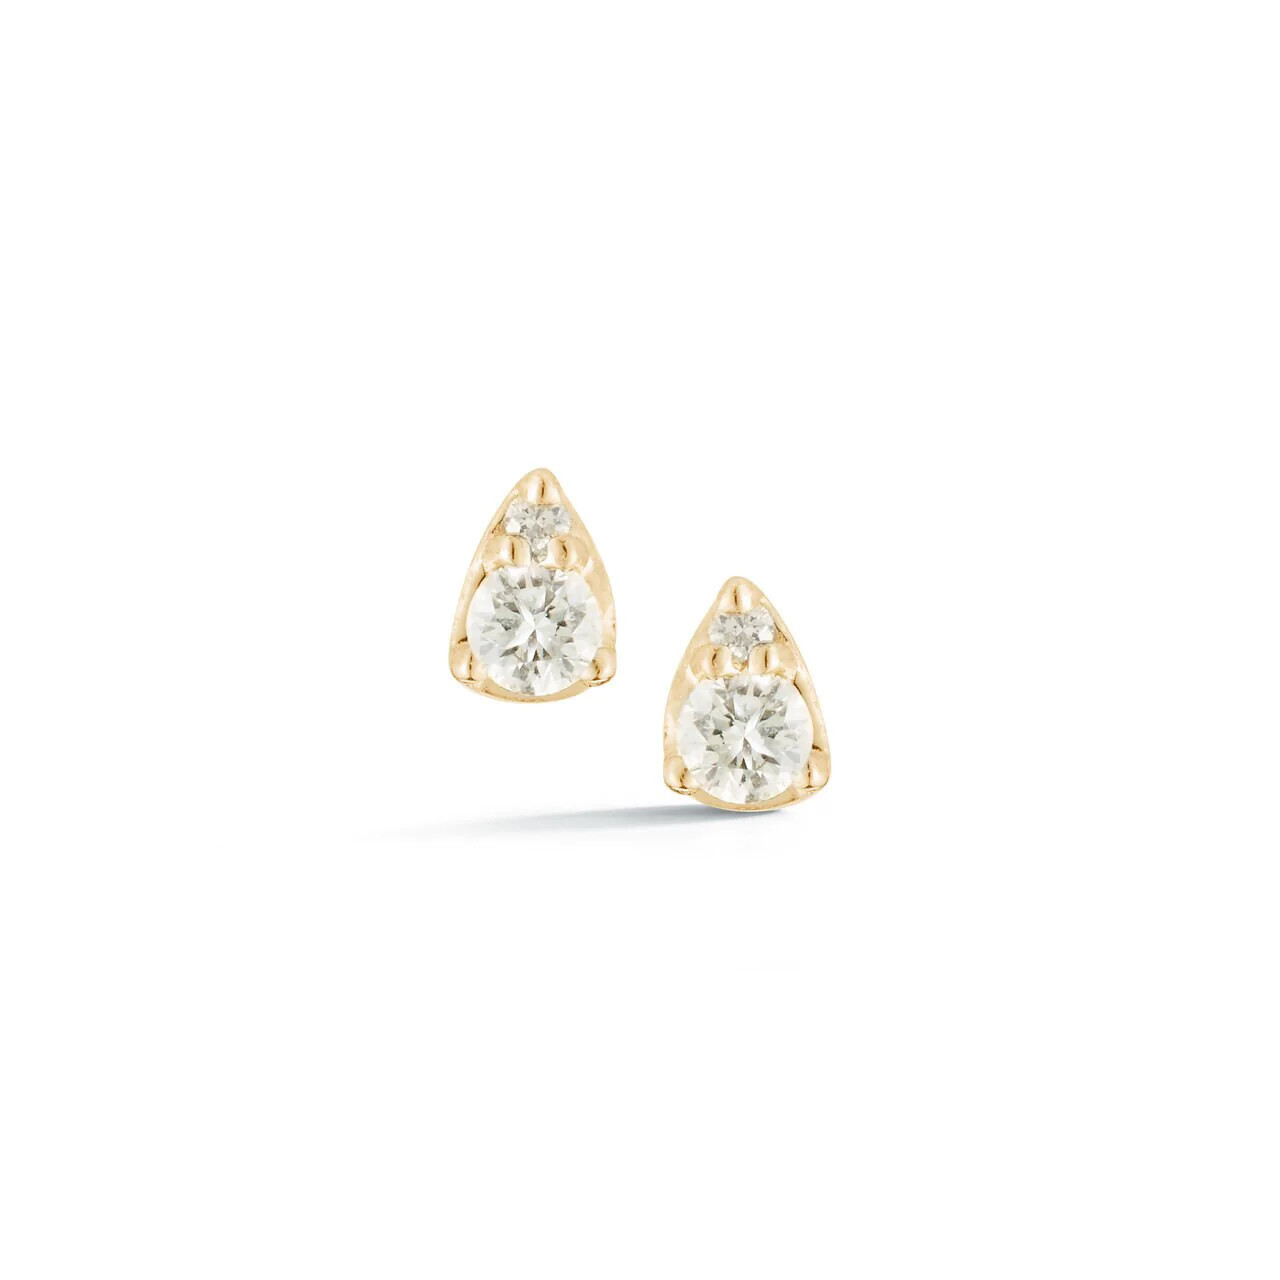 Earrings- Sophia Ryan Petite Teardrop Stud 14k YG .06ct diamonds